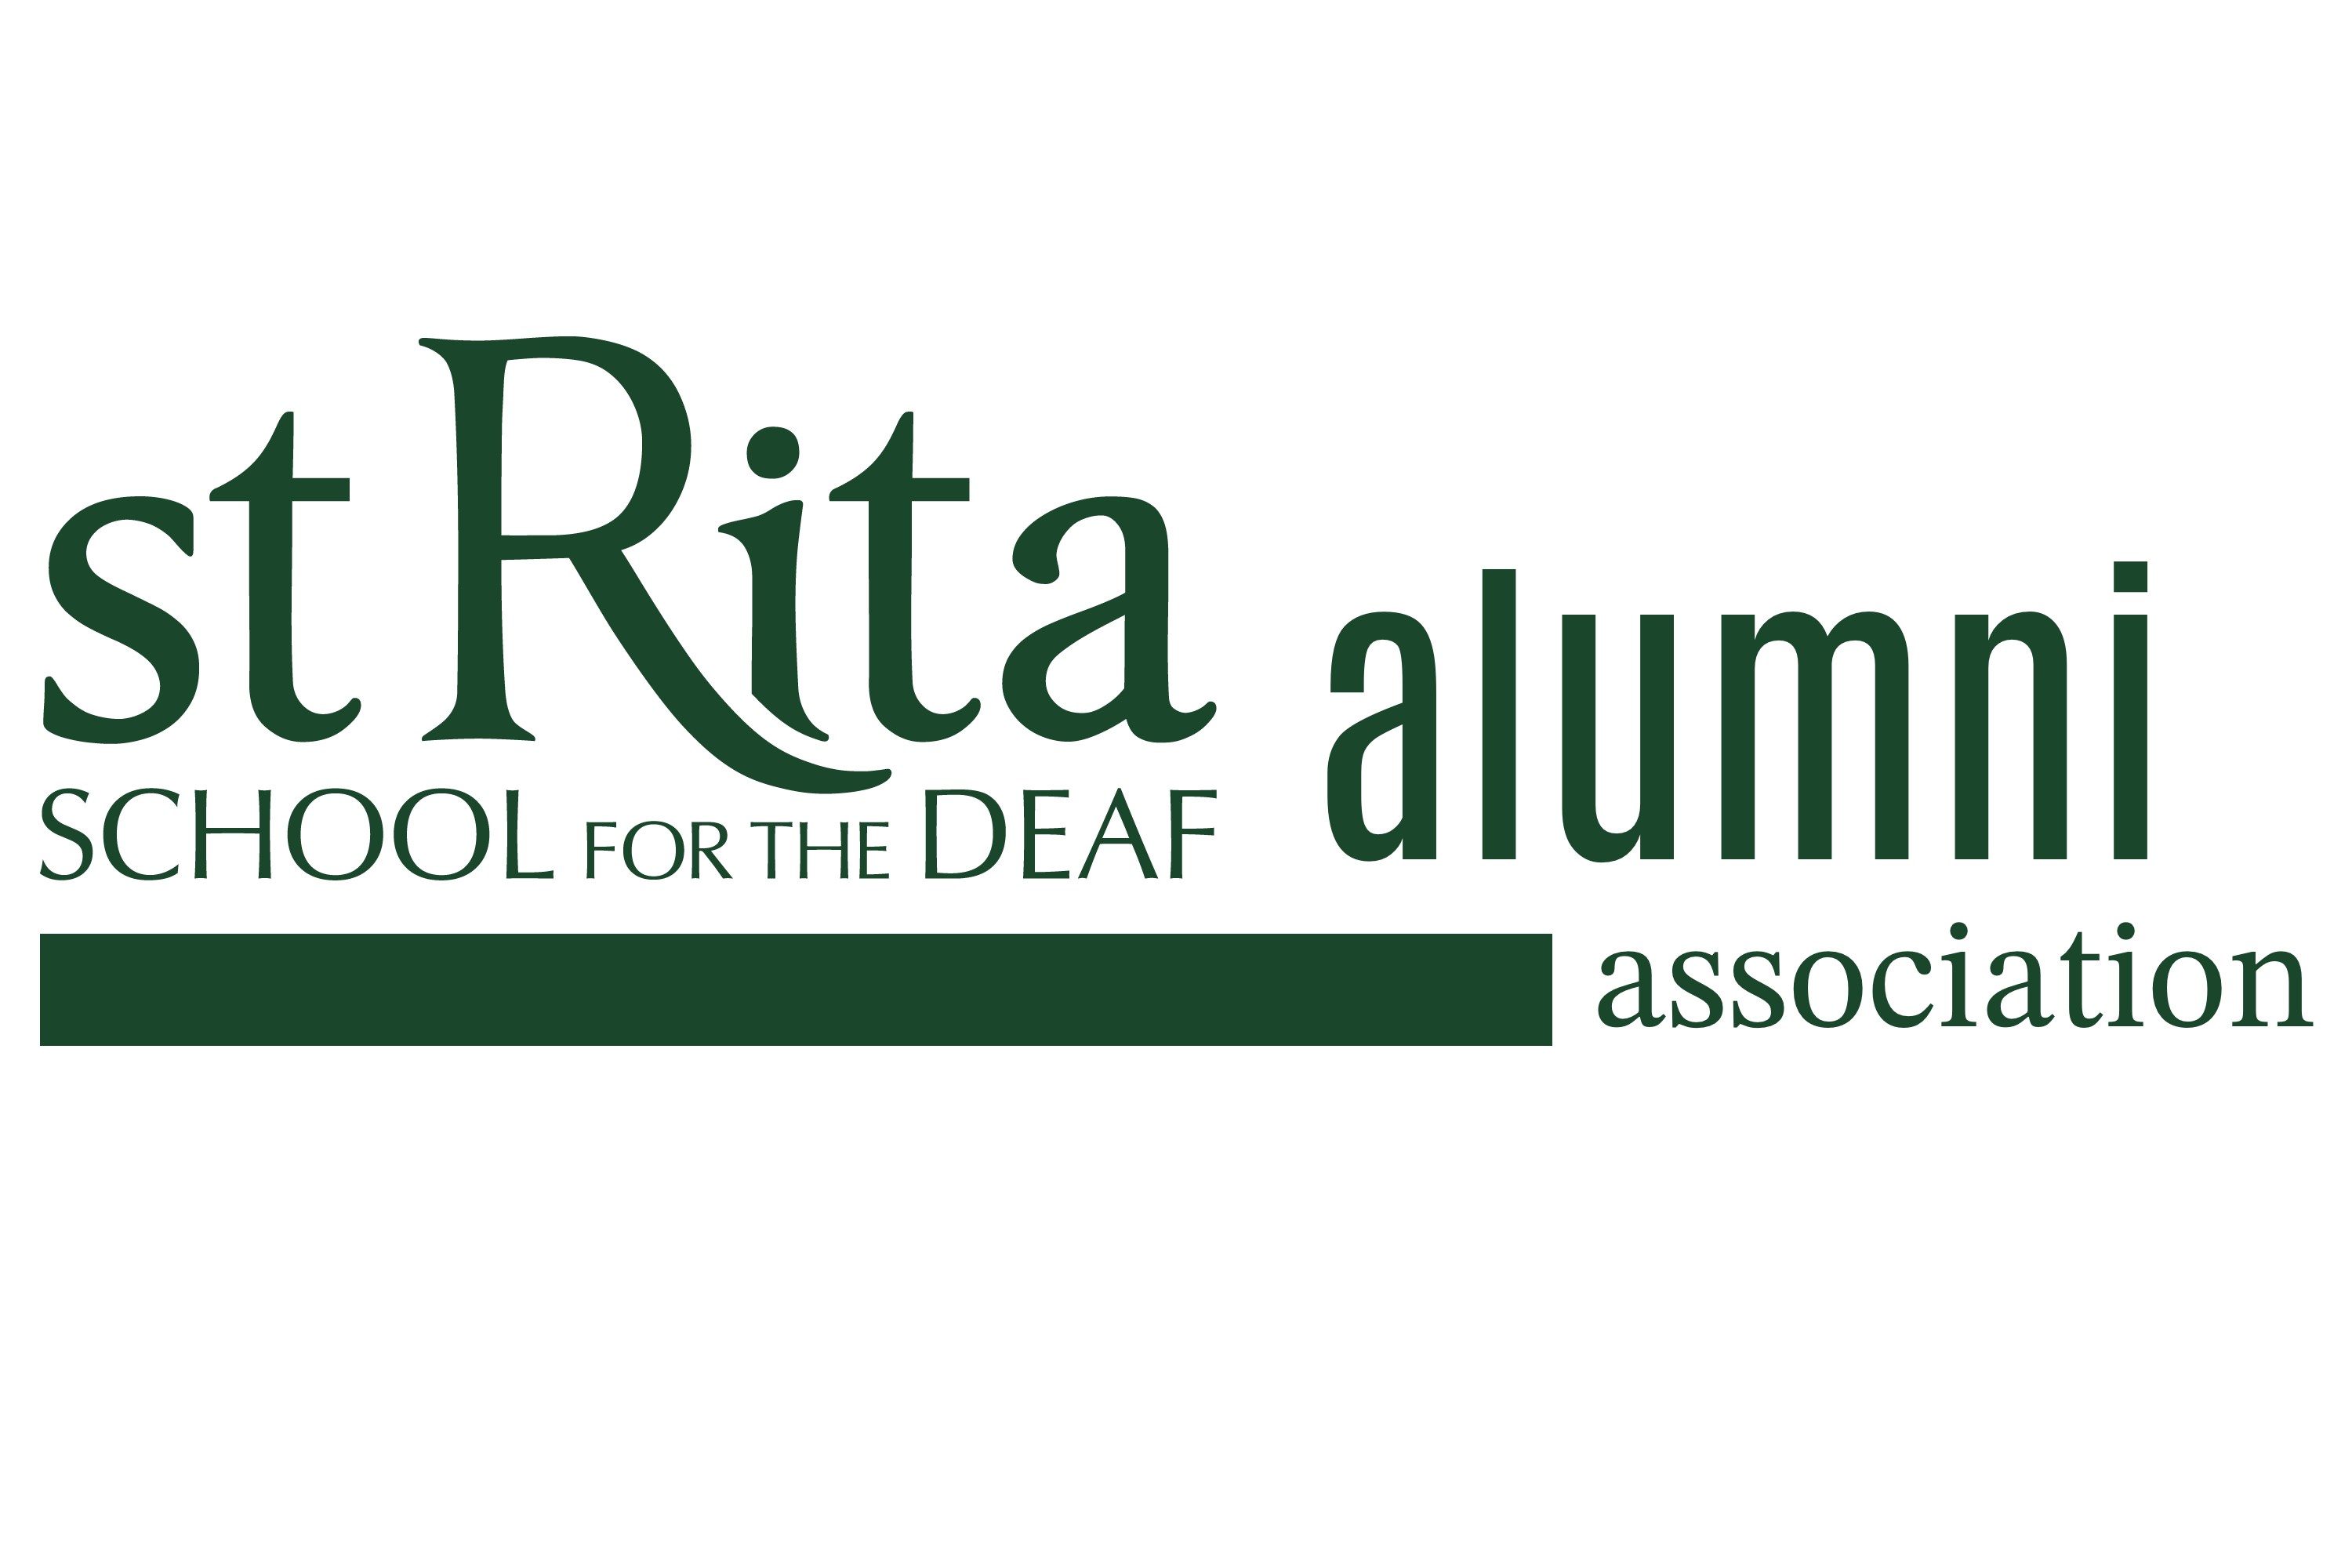 St. Rita School for the Deaf Alumni Association